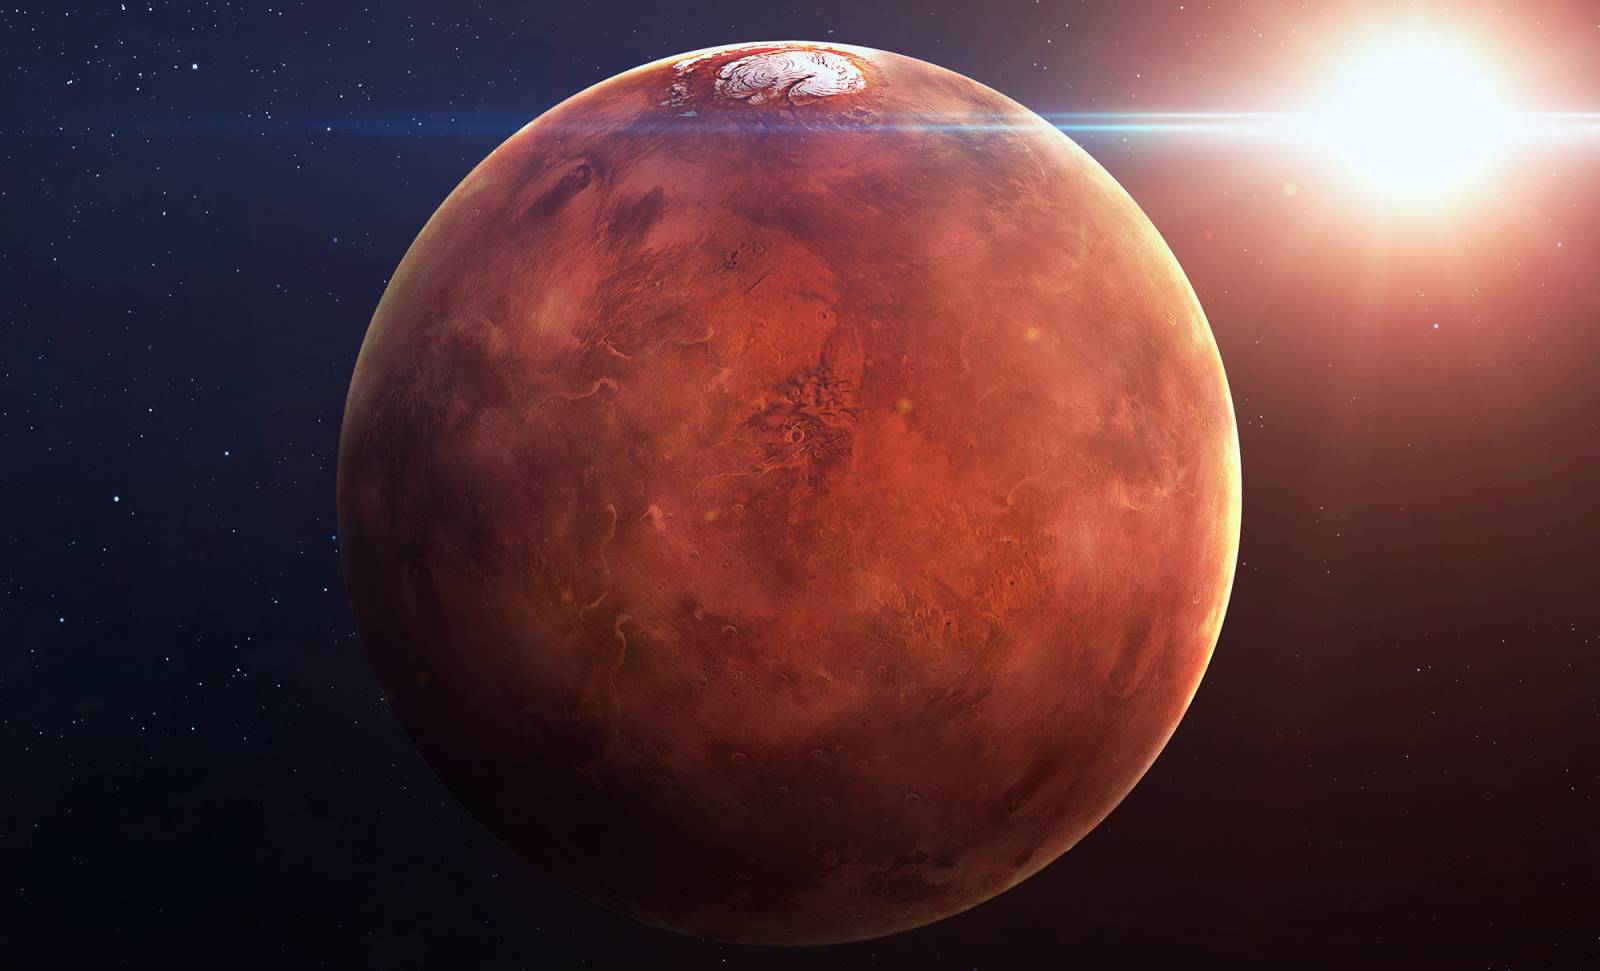 Planeta Marte aurora